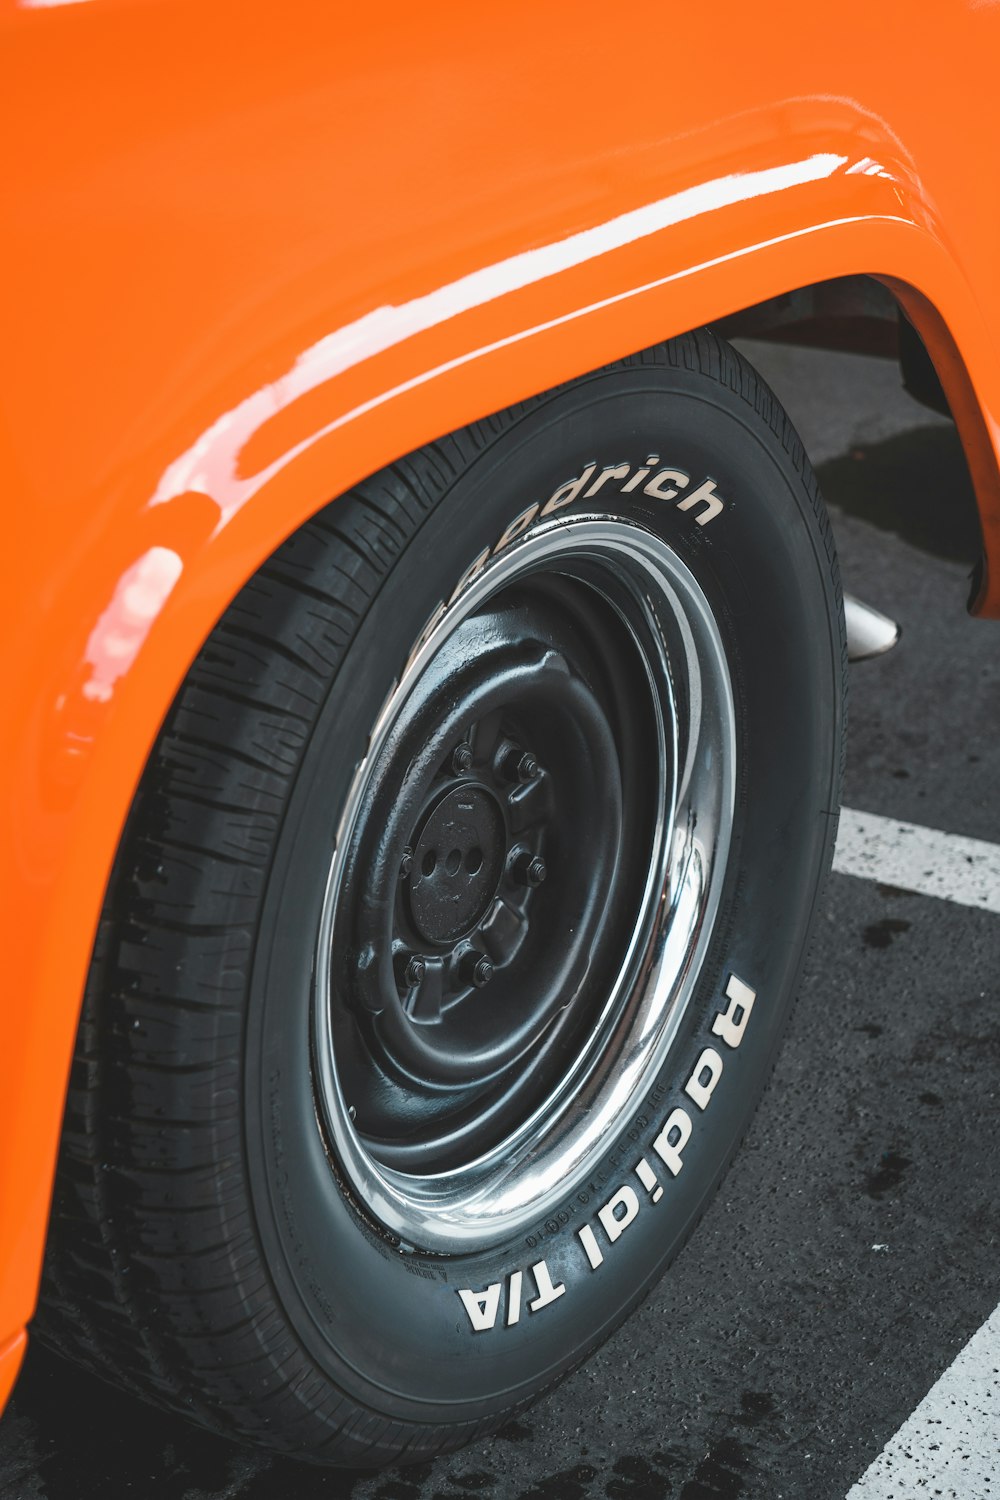 a close up of a tire on an orange car